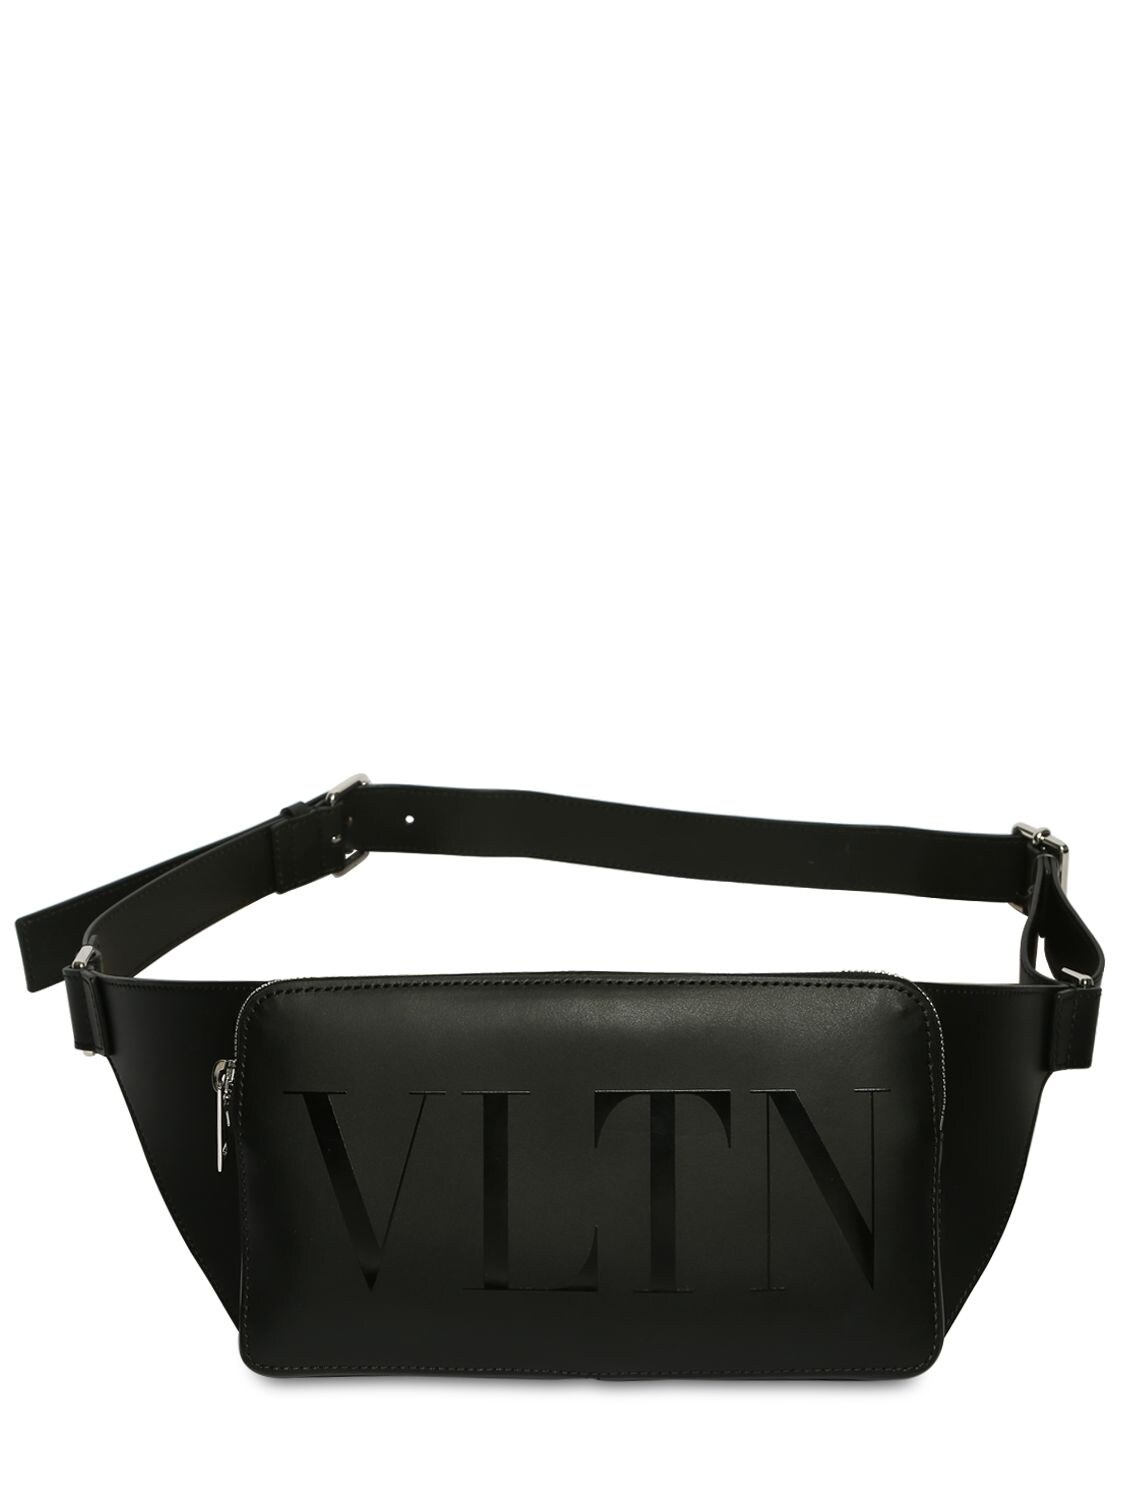 Valentino Garavani Vltn Leather Belt Bag In Black